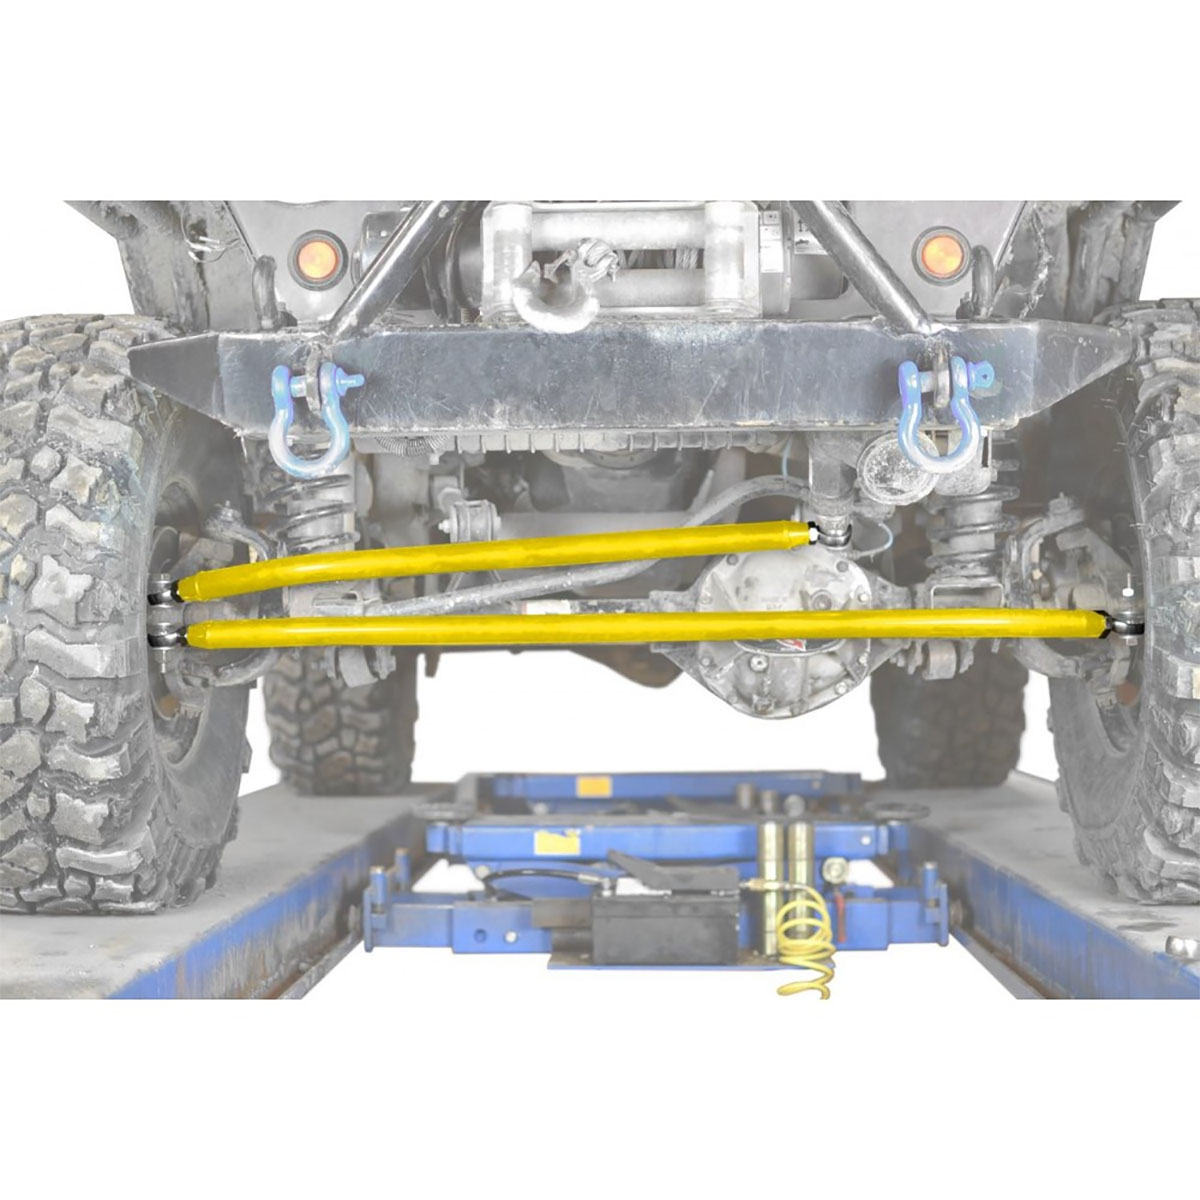 Jeep TJ Wrangler Neon Yellow Crossover Steering Kit